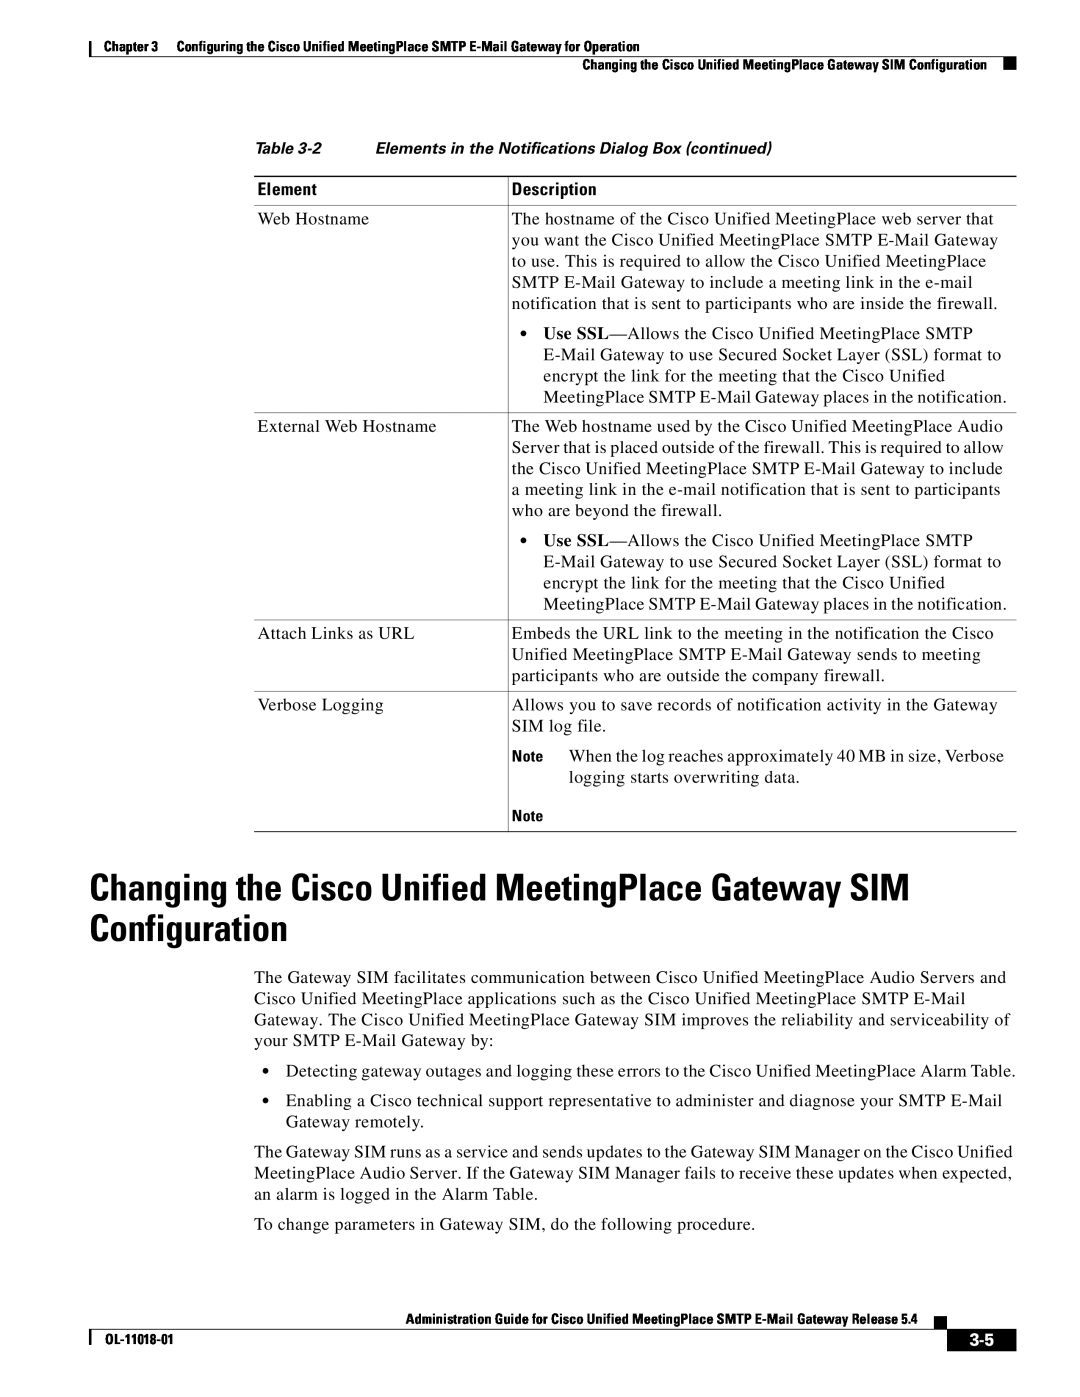 Cisco Systems SMTP manual Changing the Cisco Unified MeetingPlace Gateway SIM Configuration, Element, Description 